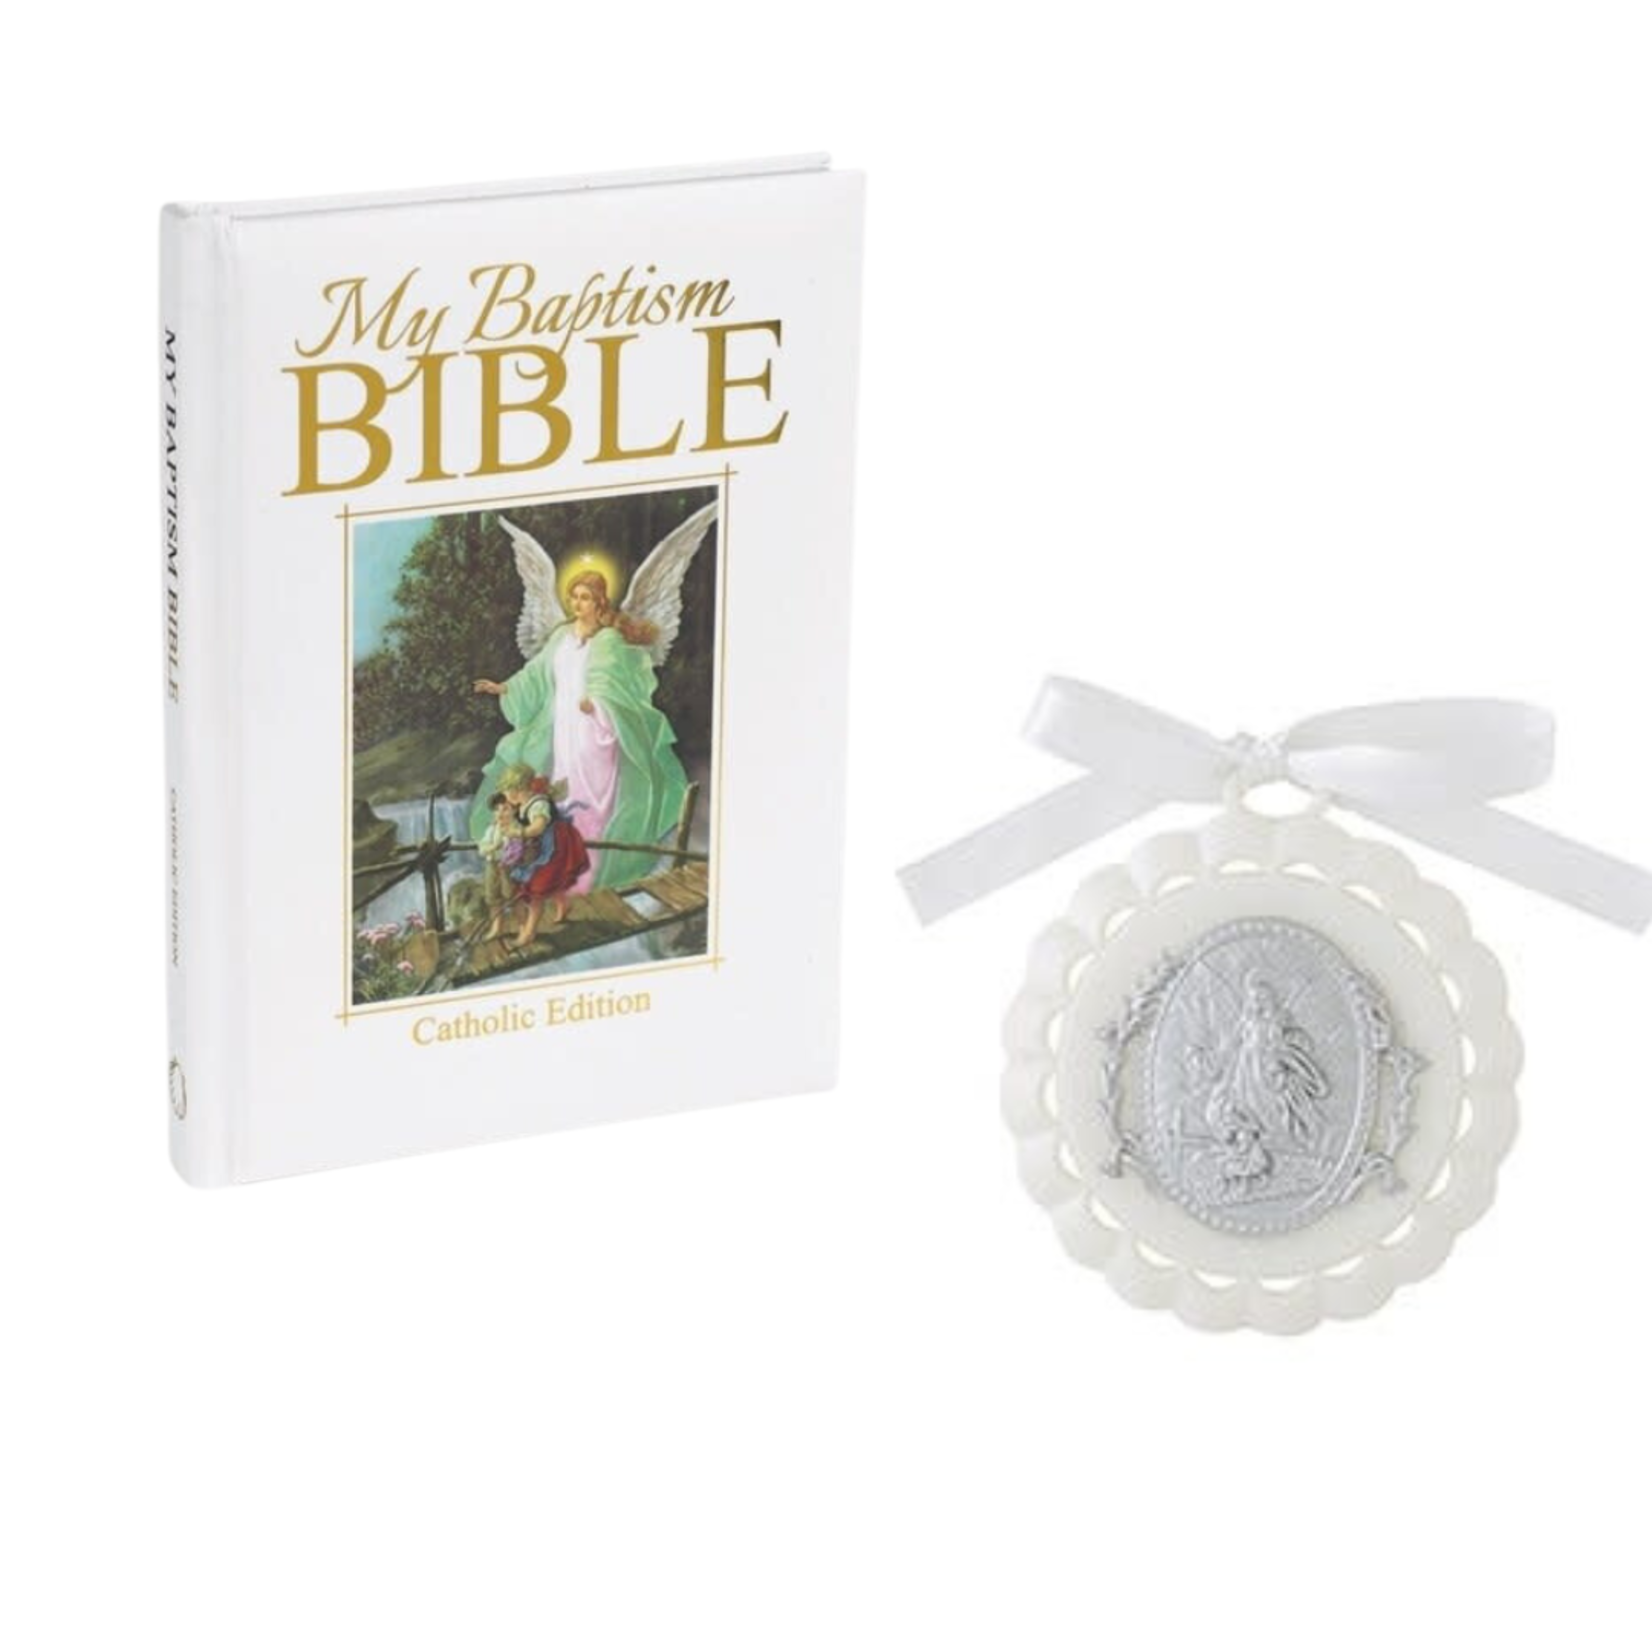 Baptism Bible Gift Set